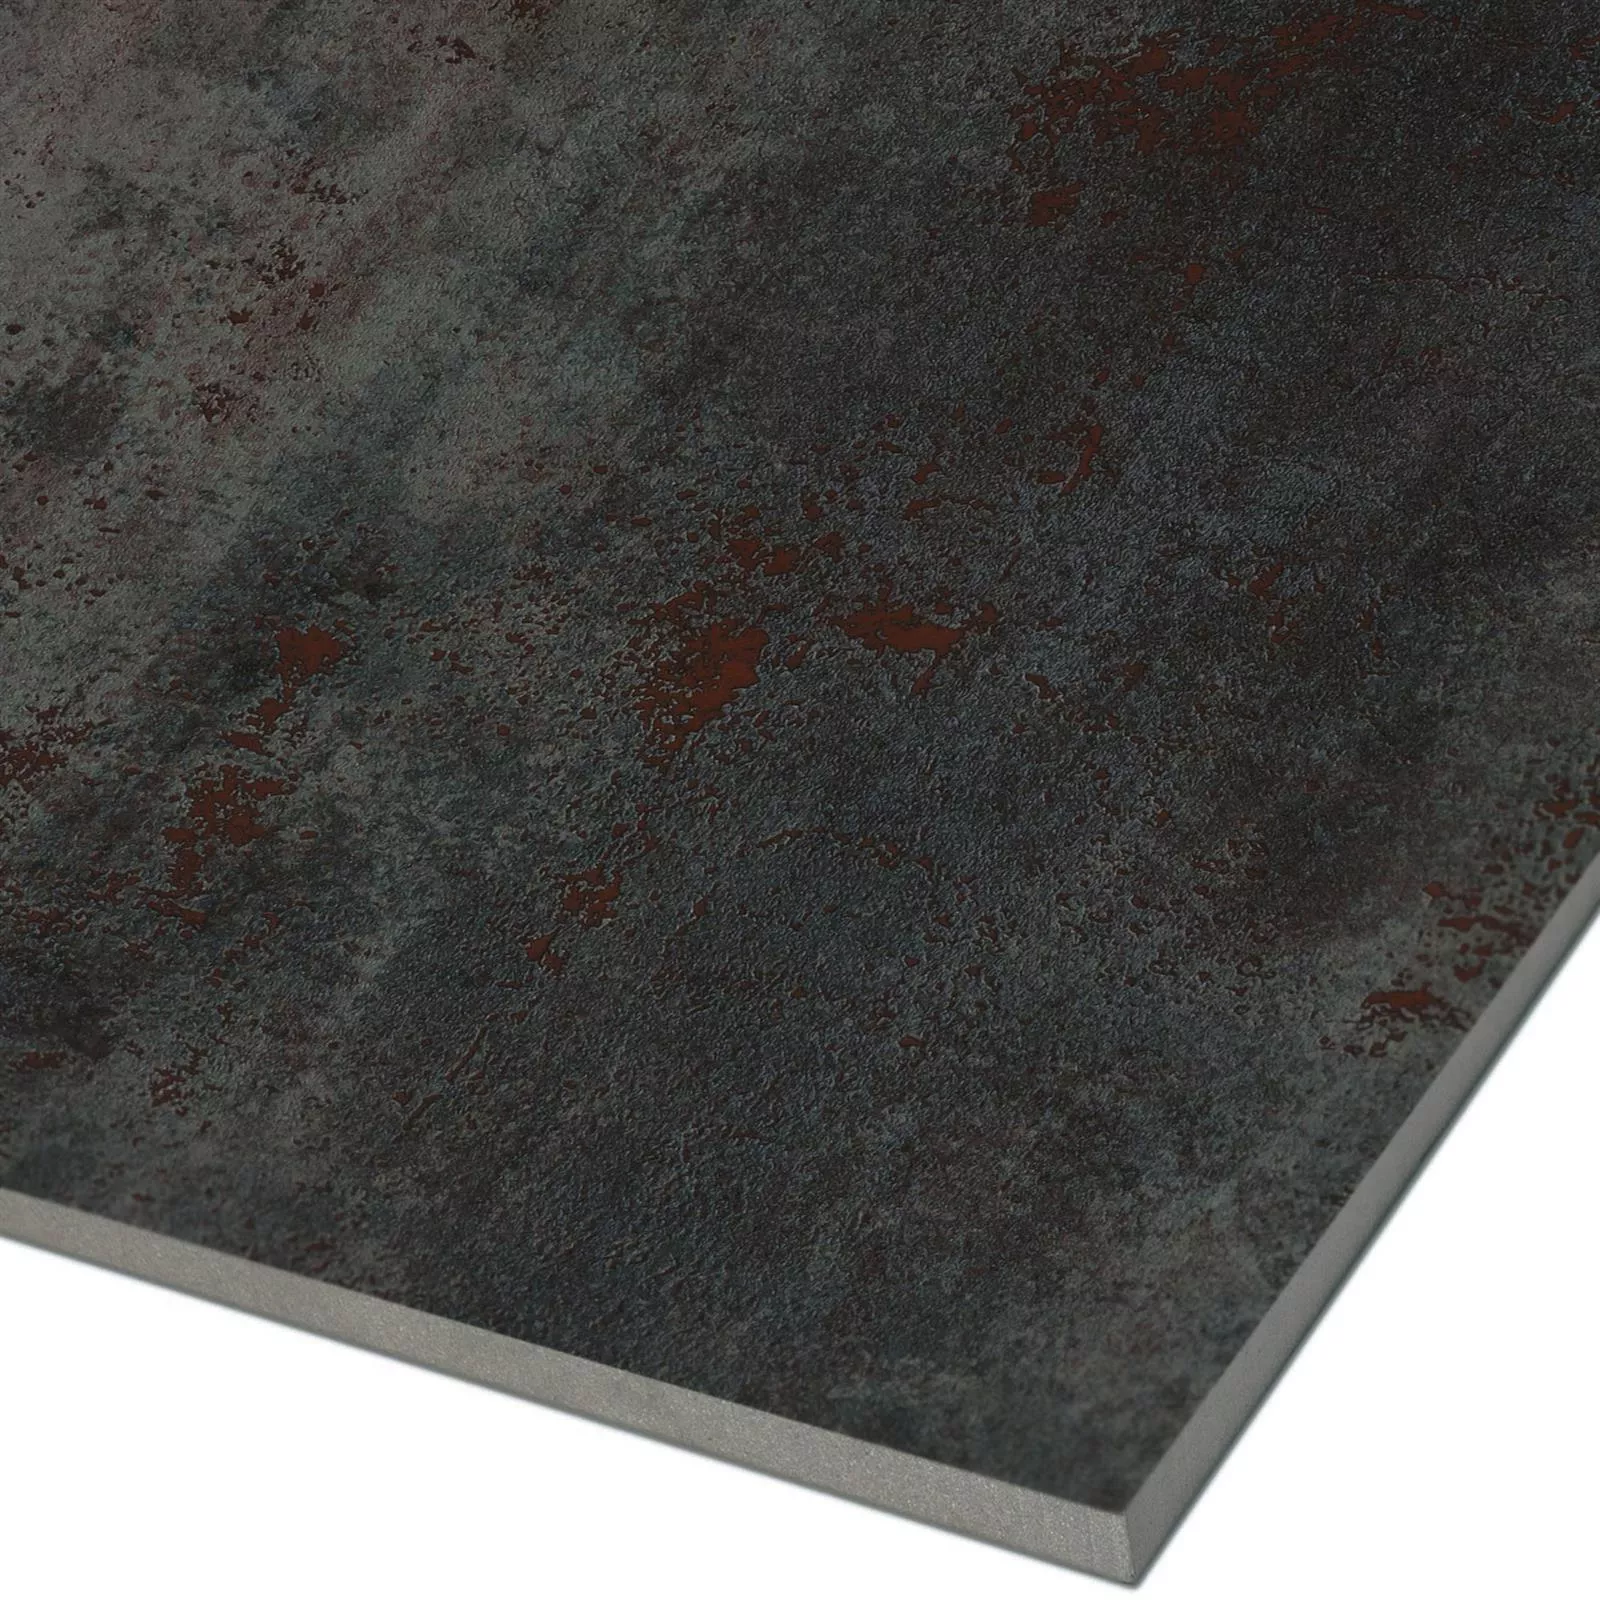 Podlahové Dlaždice Phantom Kovový Vzhled Naleštěná Titanium 30x60cm